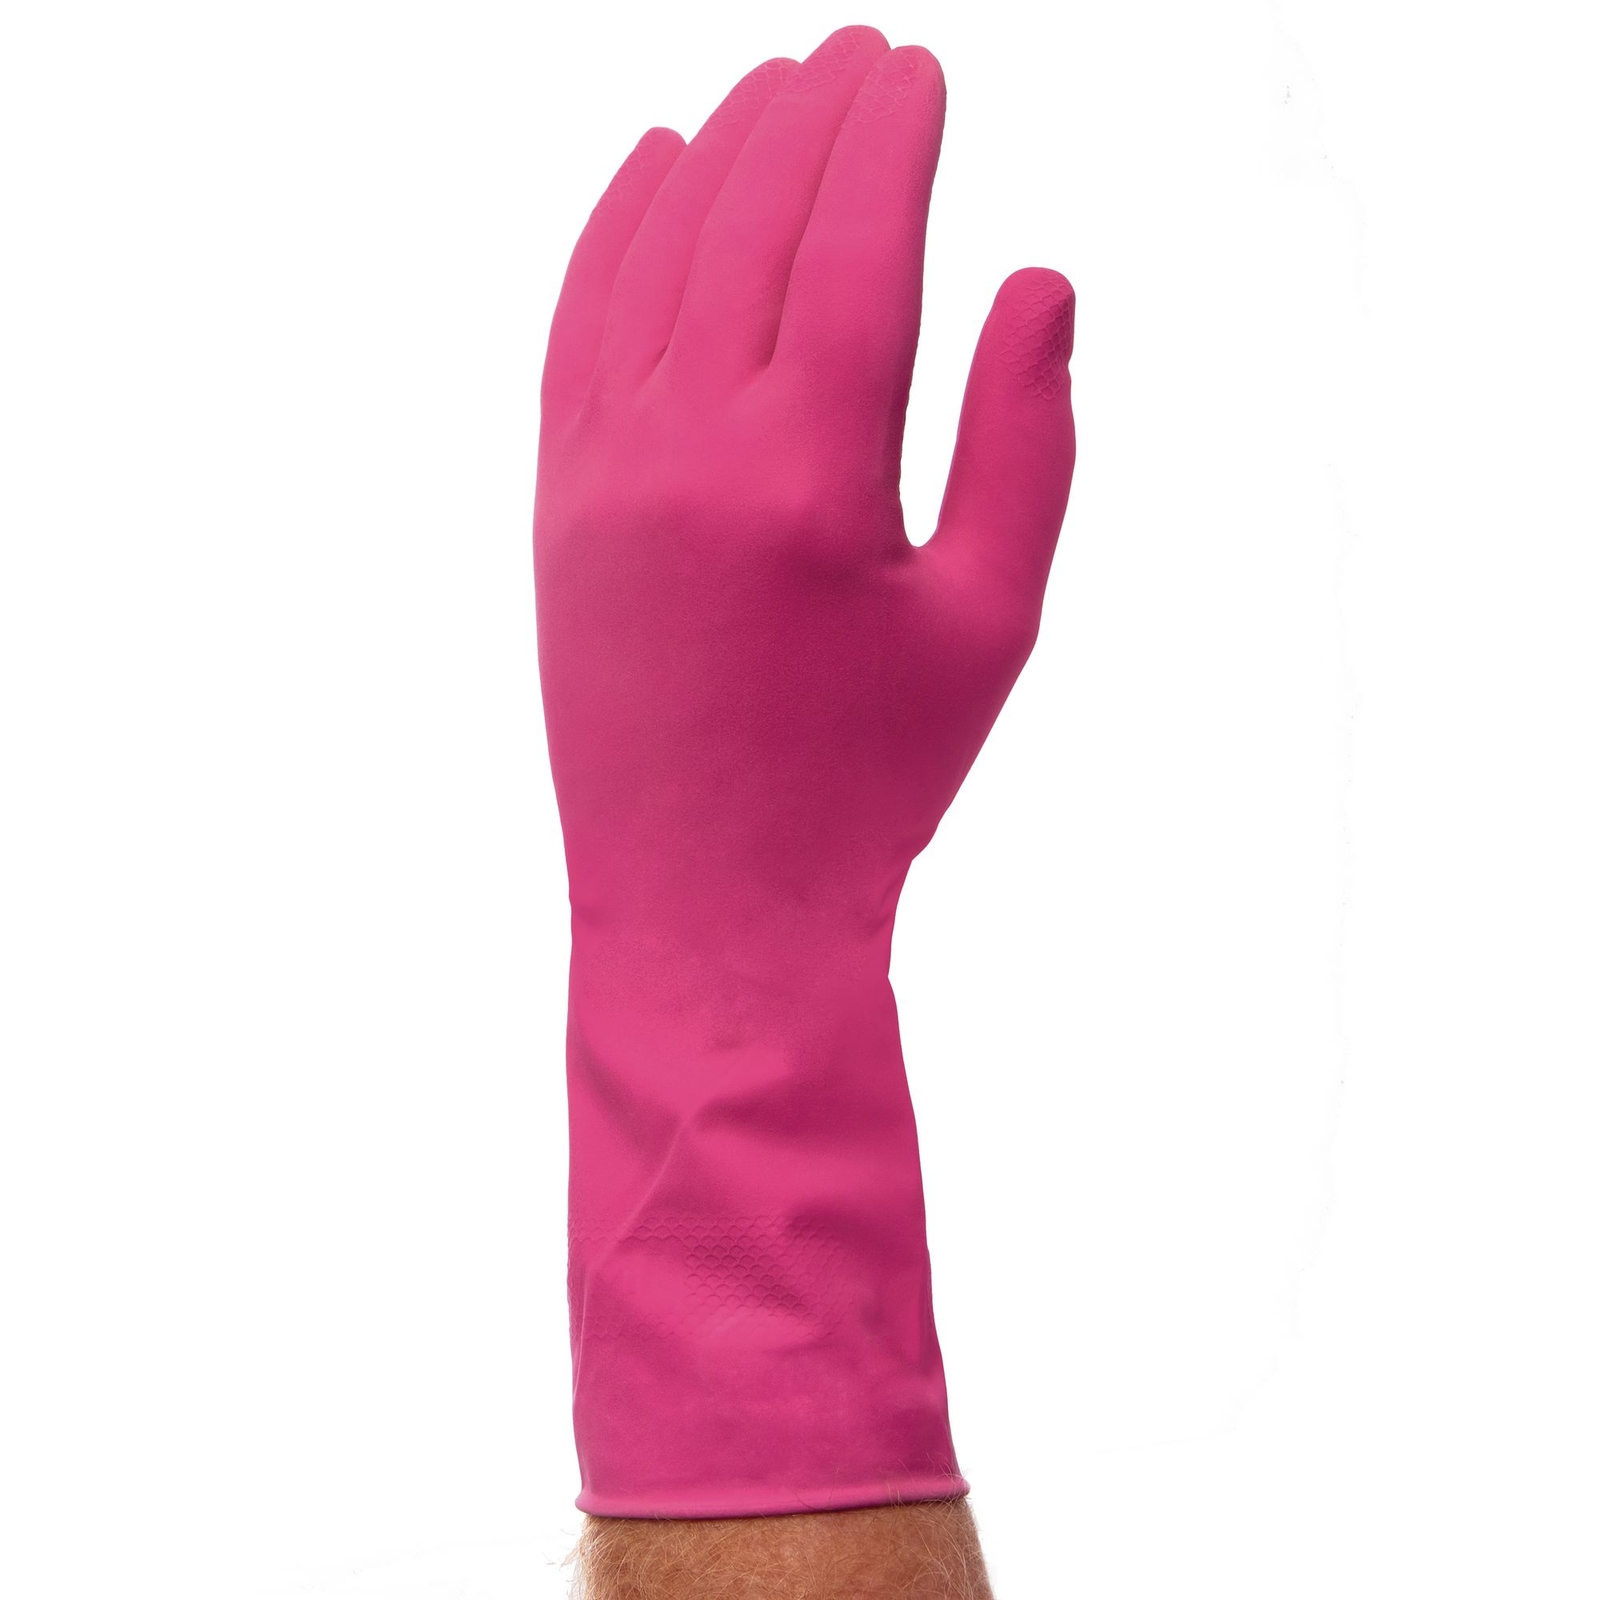 General Purpose Rubber Gloves - Pink - Medium Pack 12